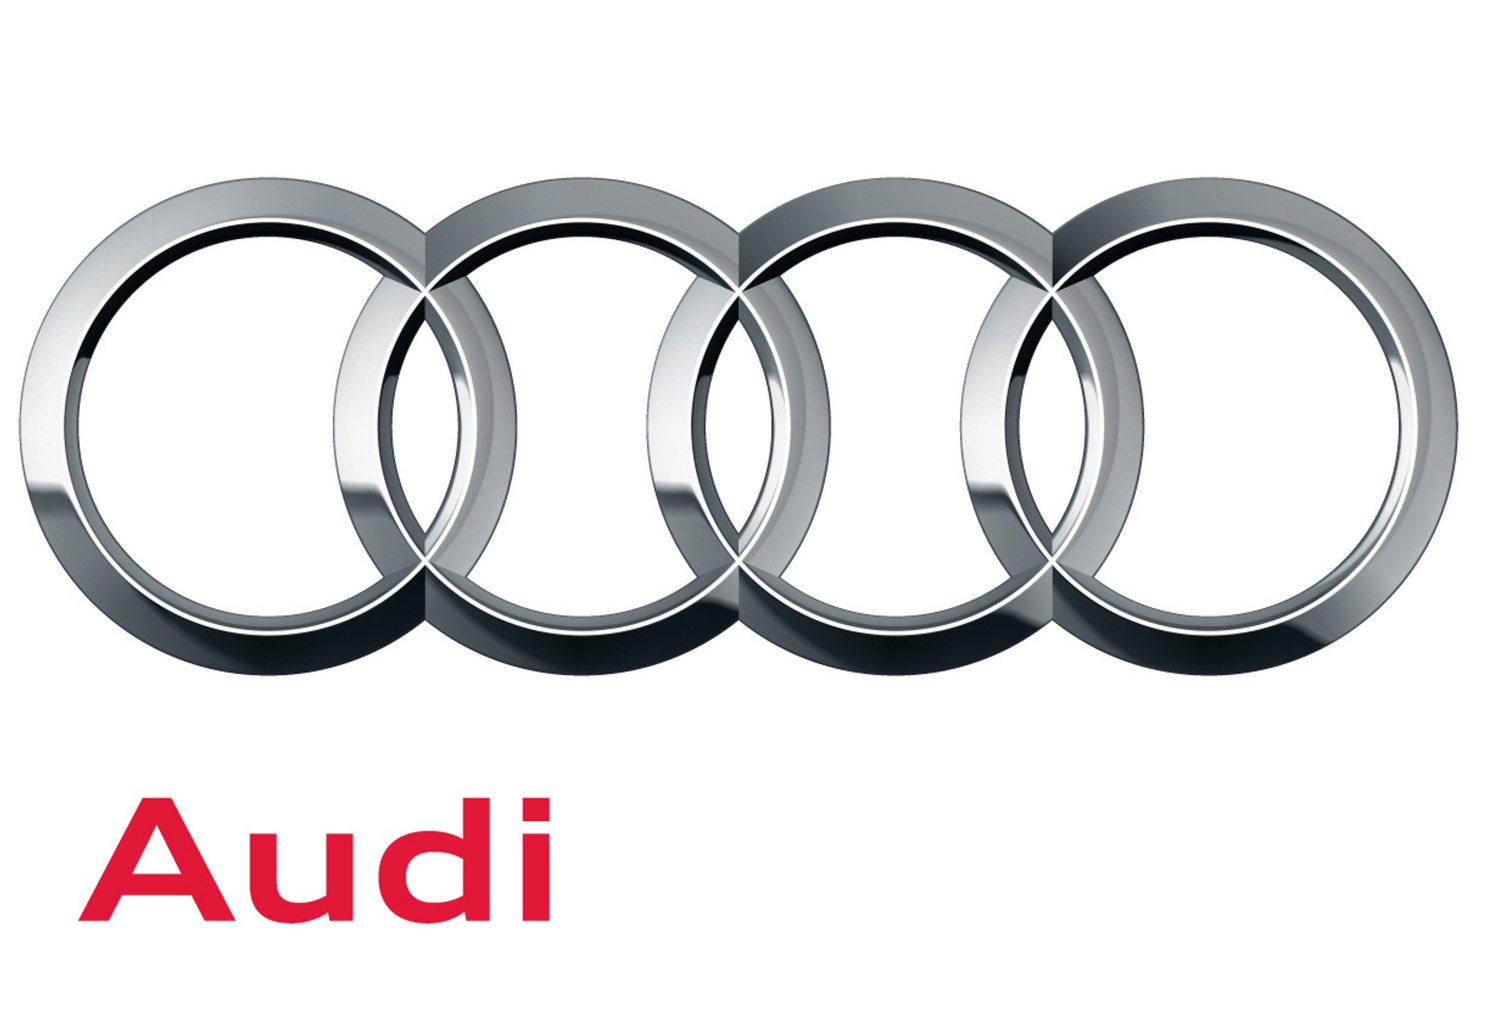 2009-current-Audi-logo-emblem.jpg